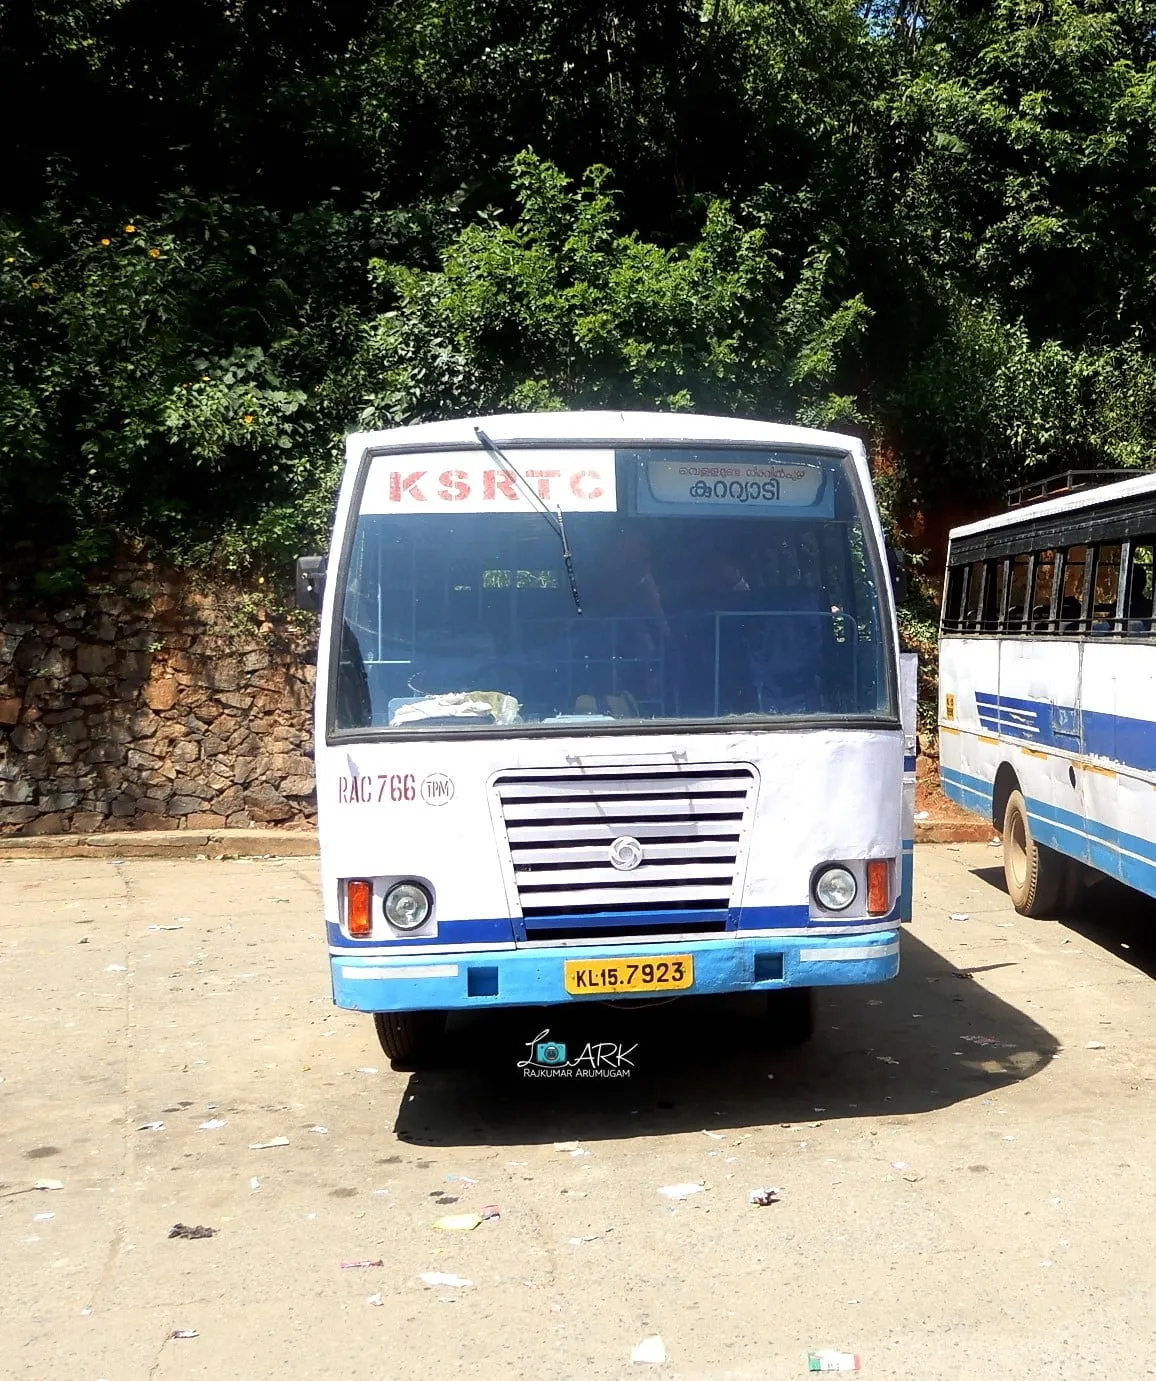 KSRTC RAC 766 Mananthavady - Kuttiady Bus Timings